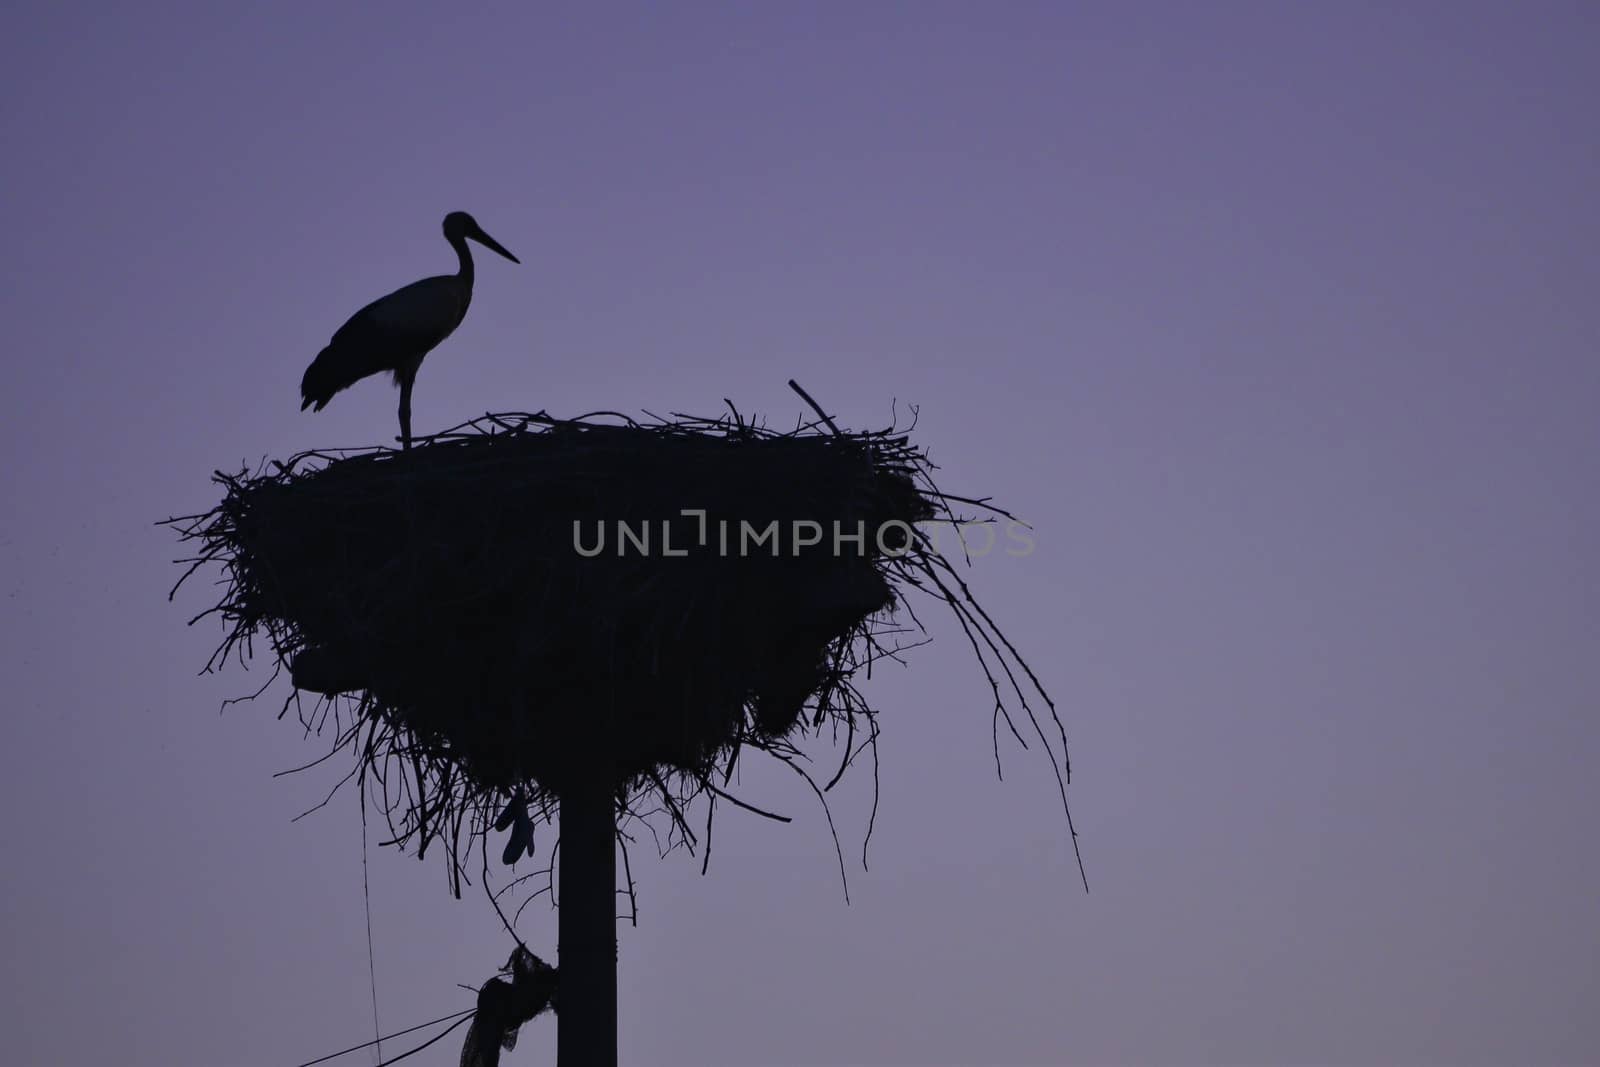 Stork nests and habitat by crazymedia007